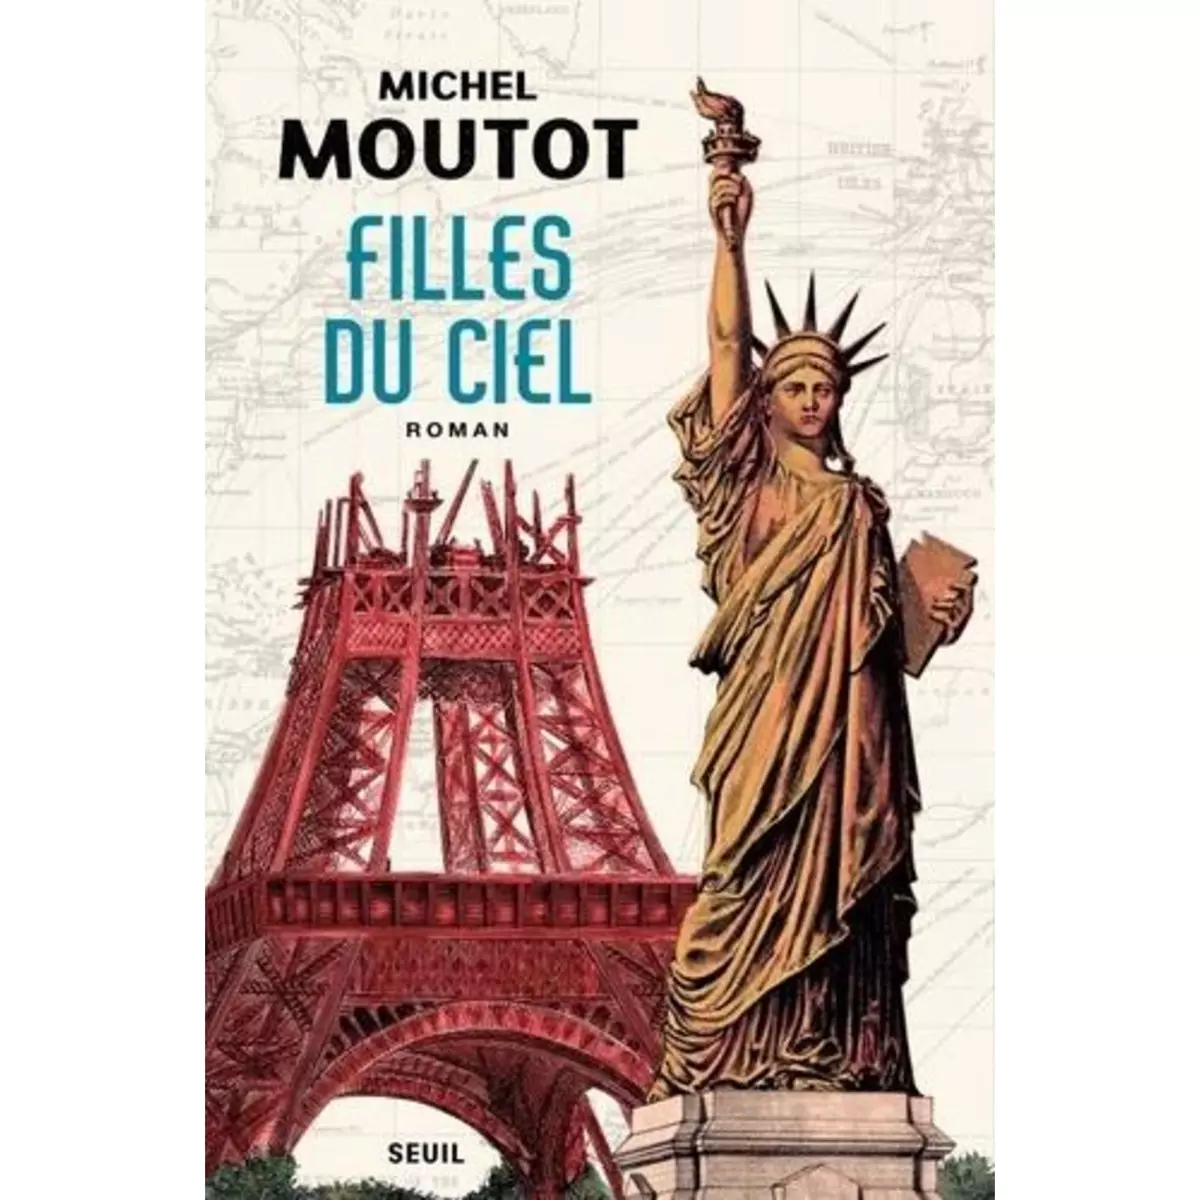  FILLES DU CIEL, Moutot Michel